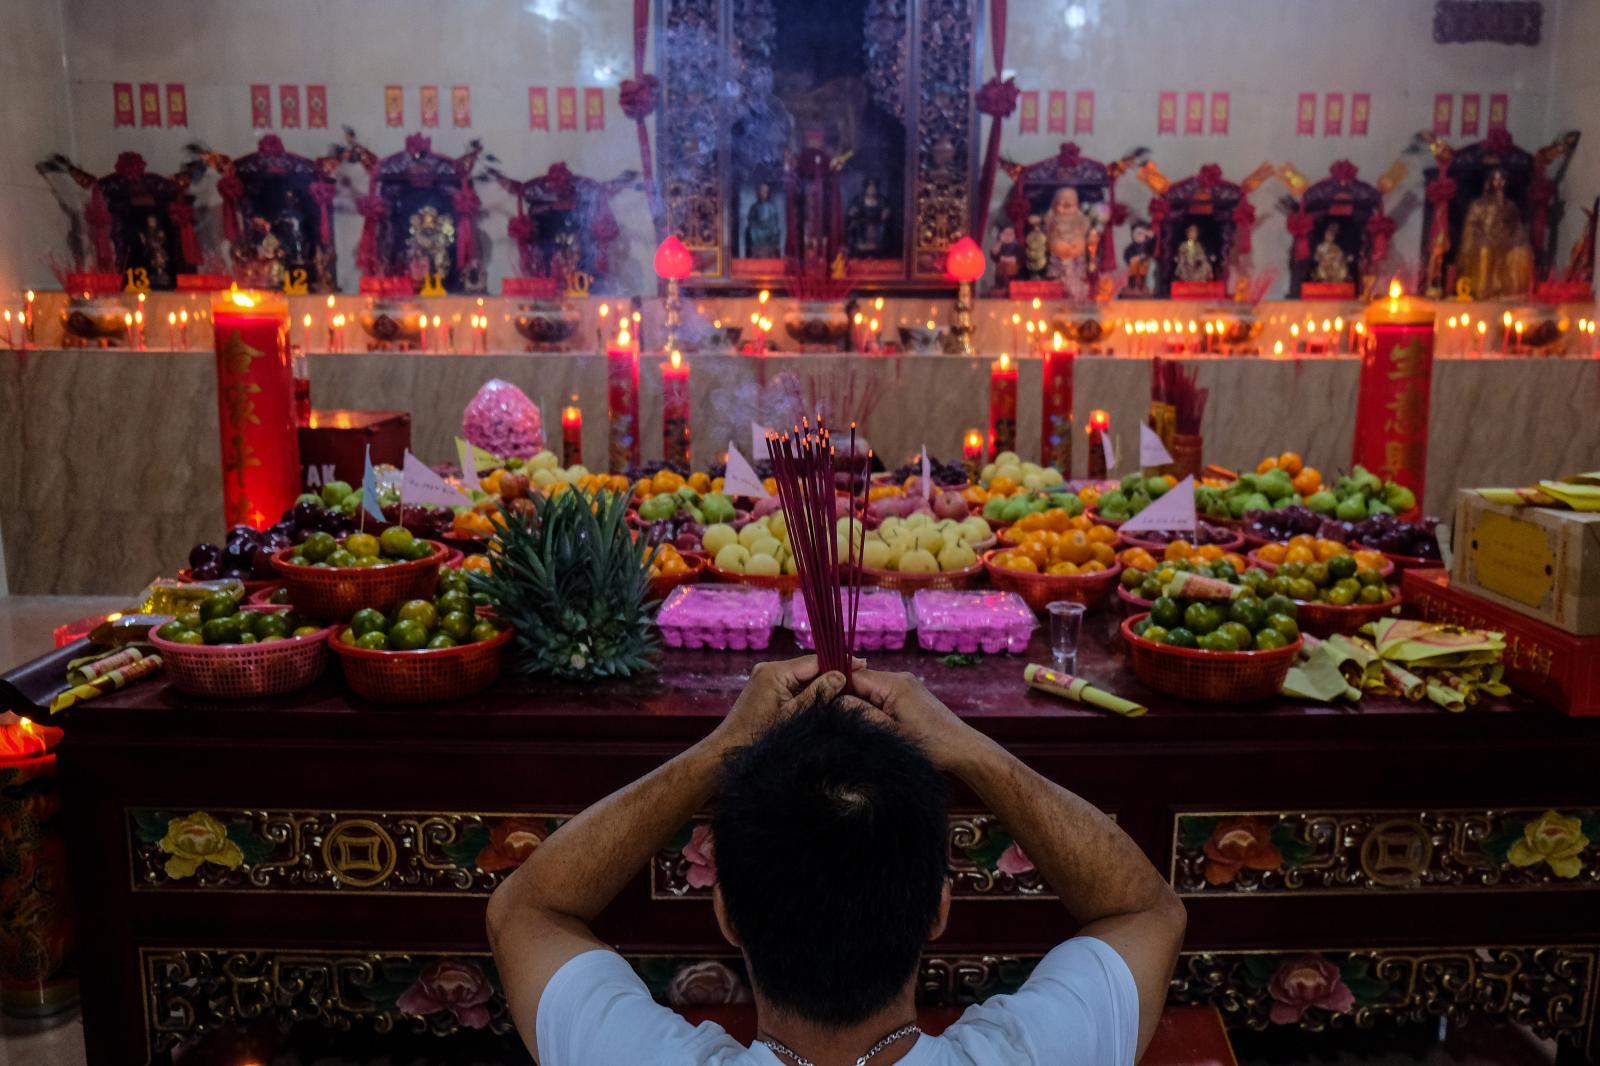 A worshipper pray at Temple Fuk...oing The Chit Ngiat Pan ritual.